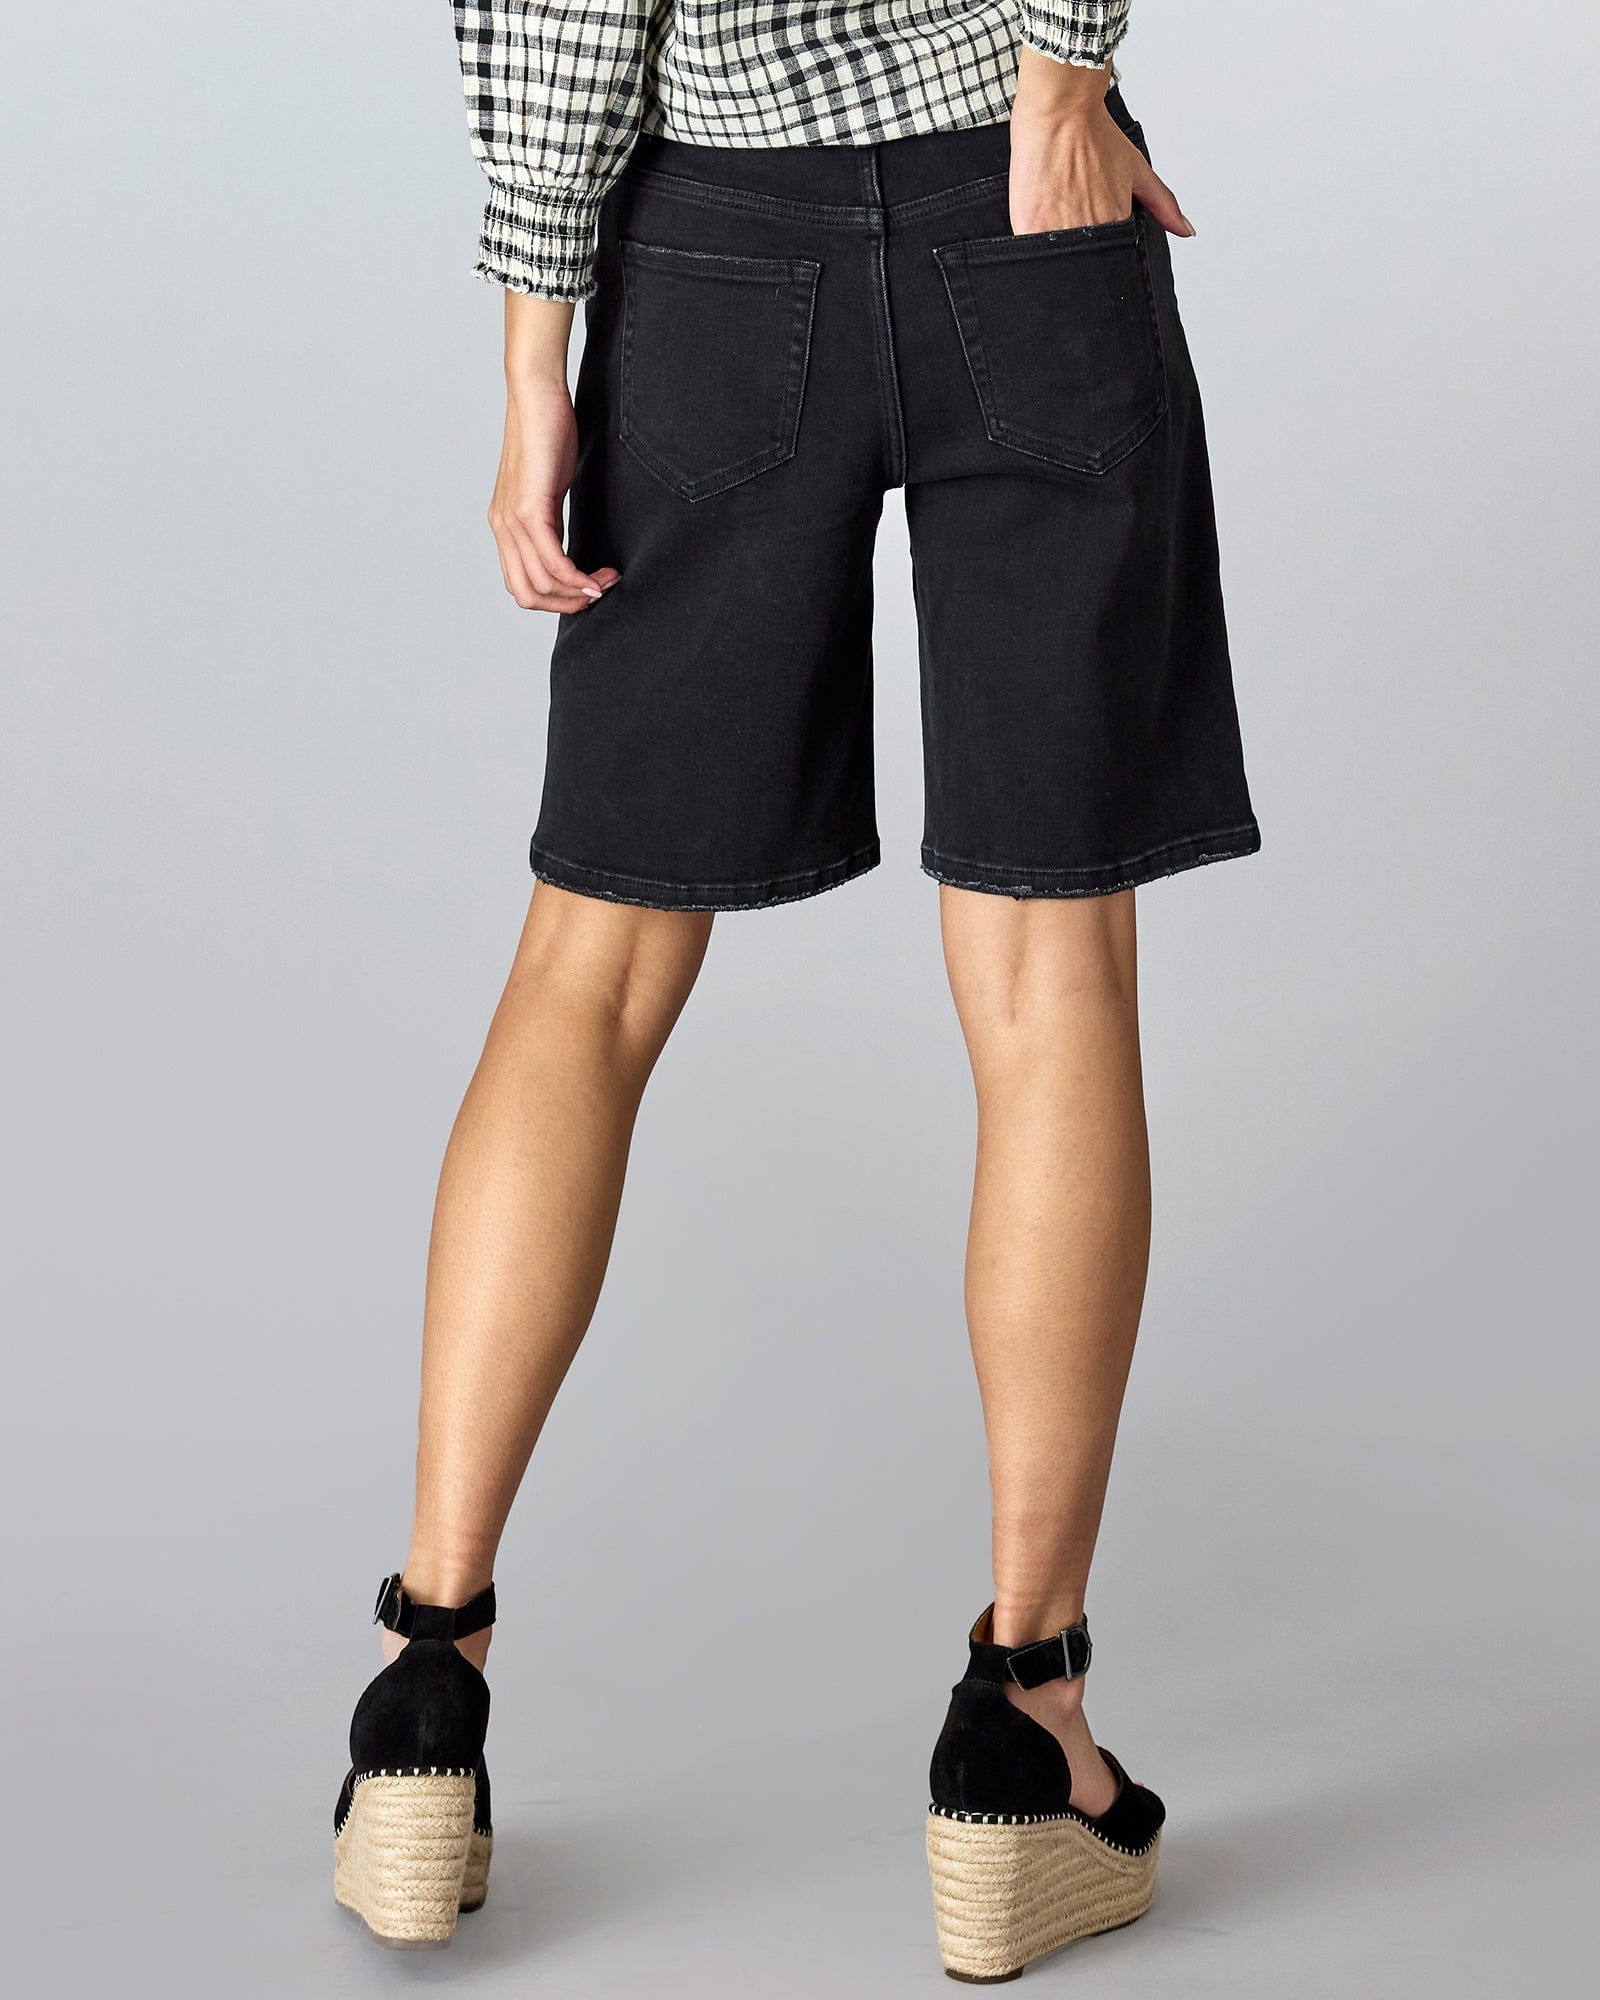 Woman in baggy bermuda shorts.